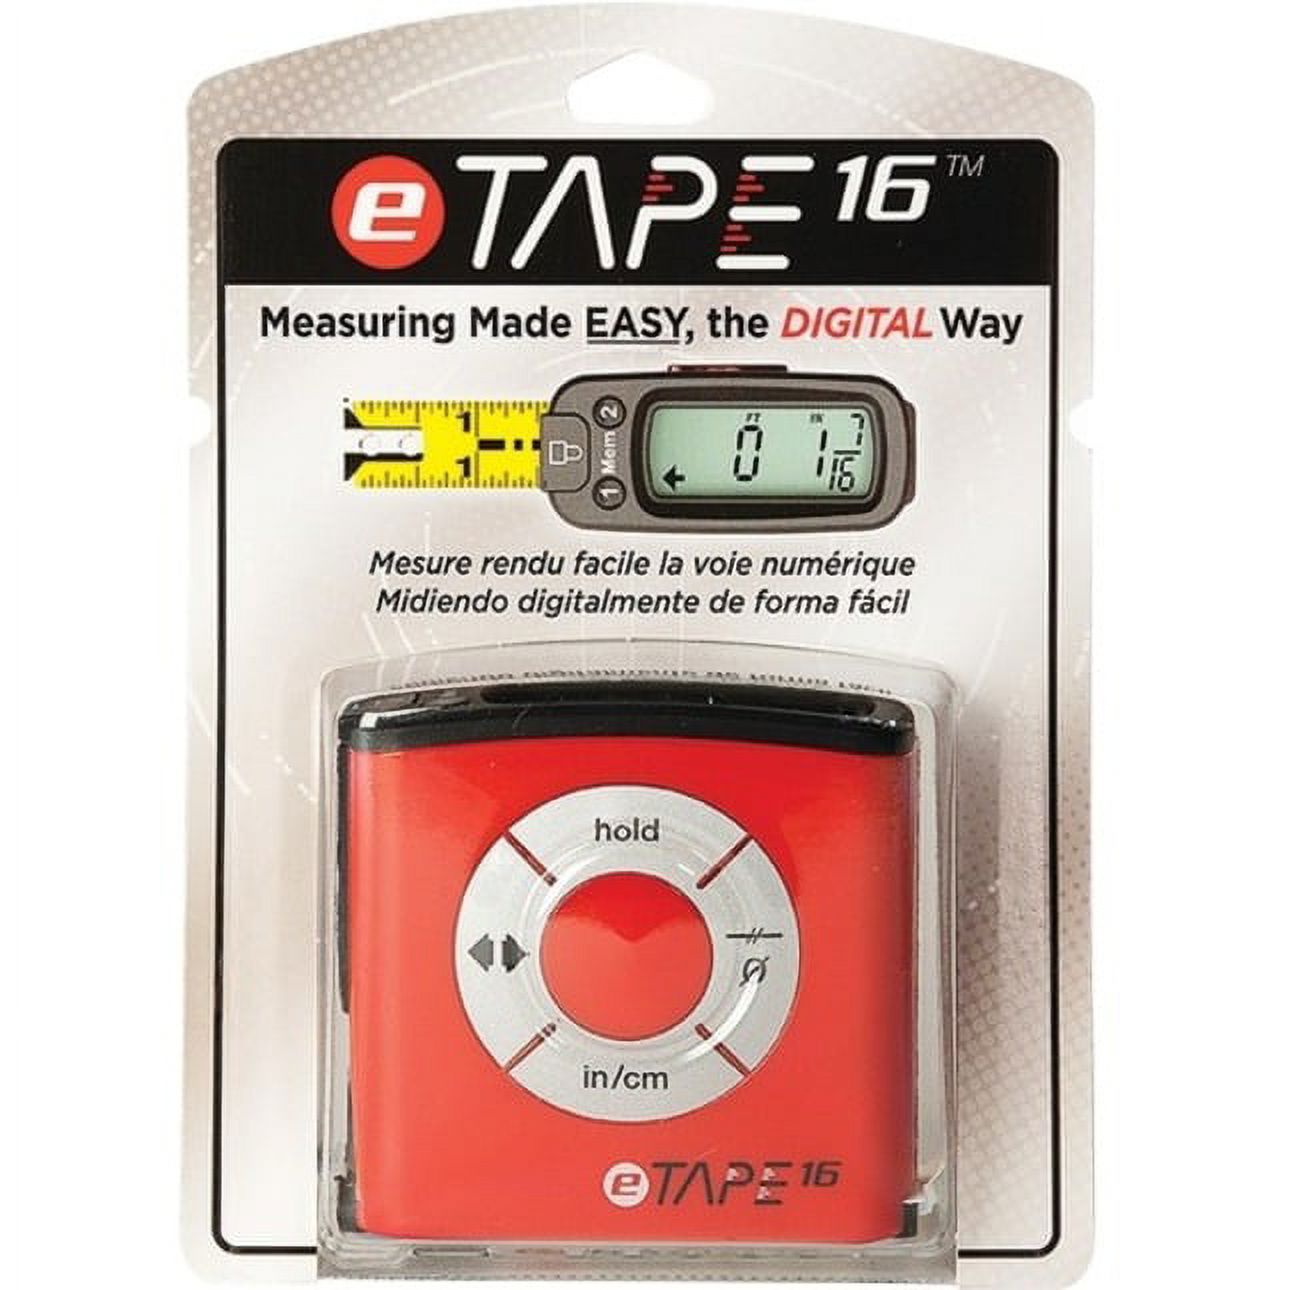 eTape16 ET16.75-db-RP Digital Tape Measure, 16 Feet, Red - image 1 of 2